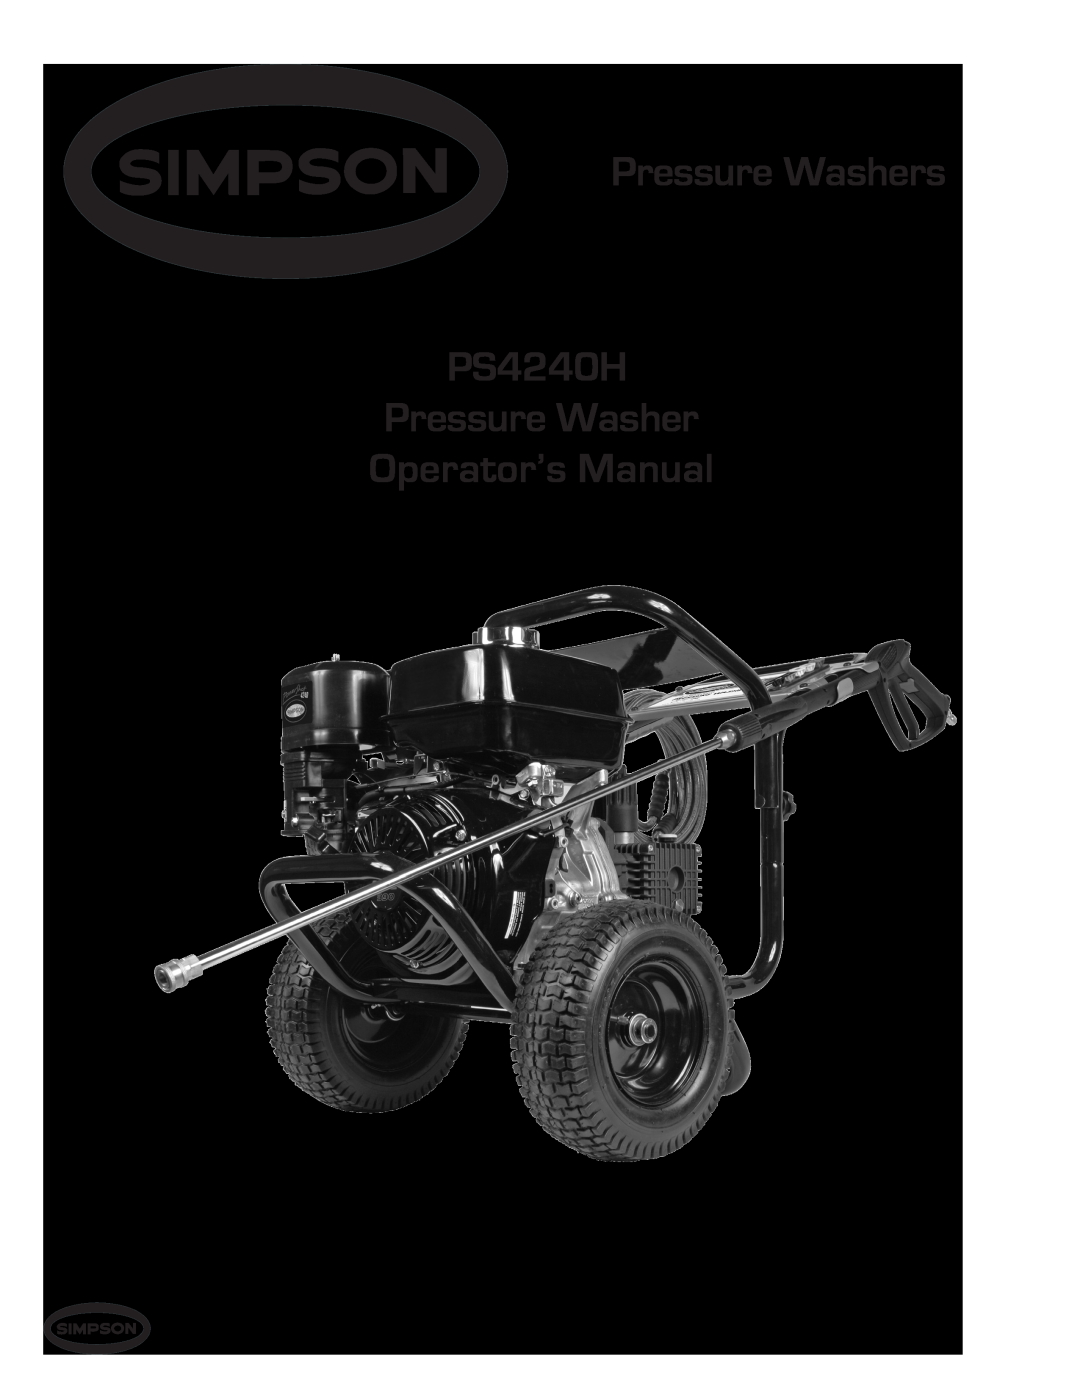 Simpson manual Pressure Washers PS4240H Pressure Washer, Operator’s Manual 